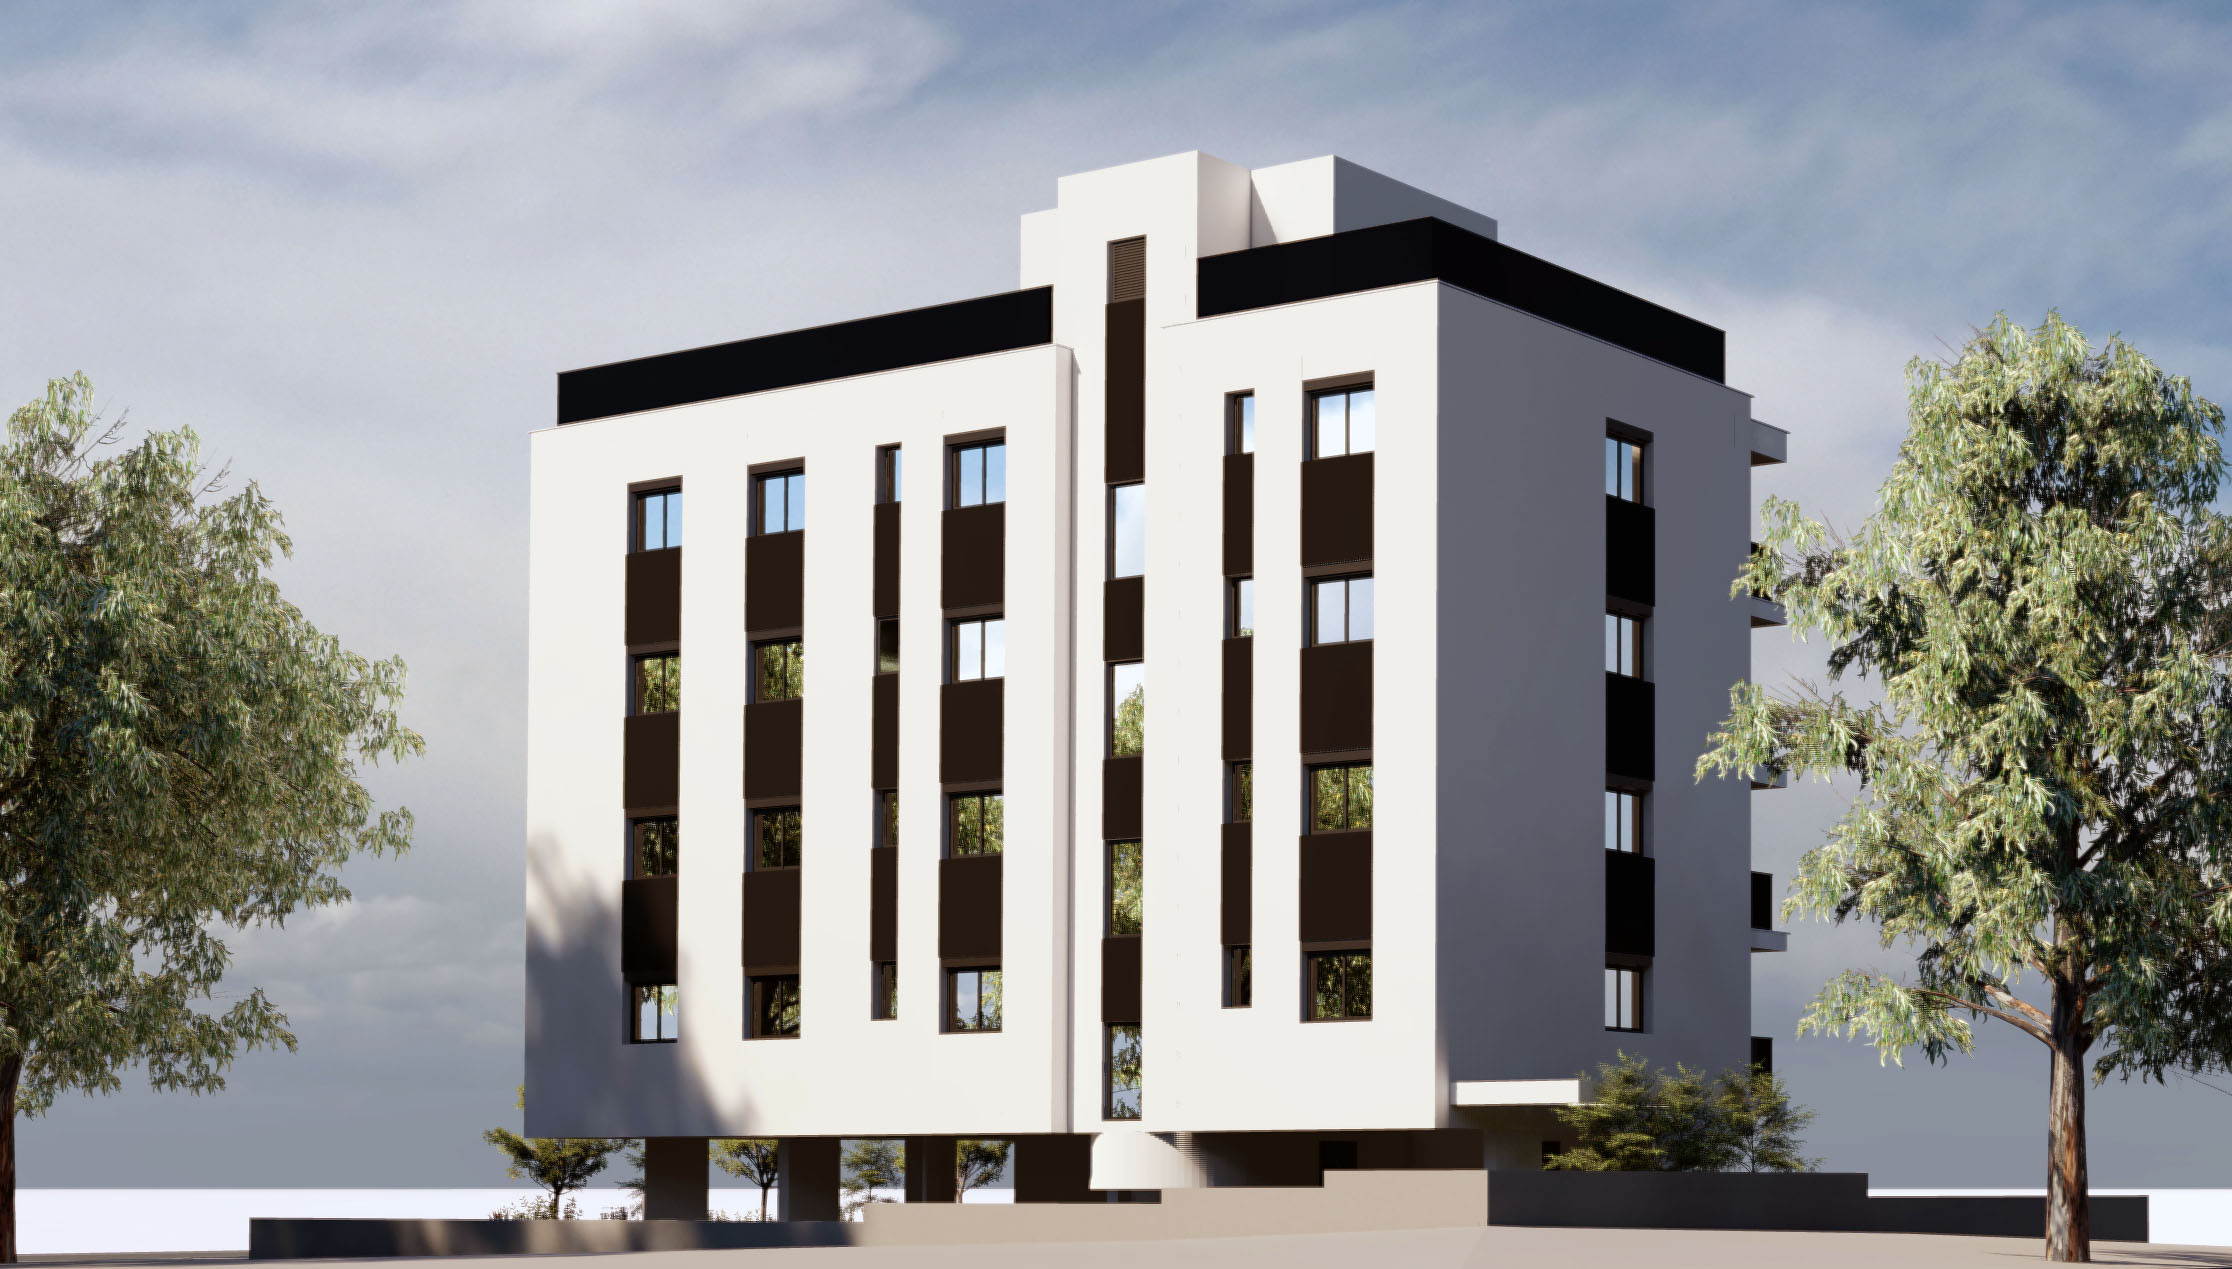 3 Bedroom Apartment for Sale in Aglantzia, Nicosia District